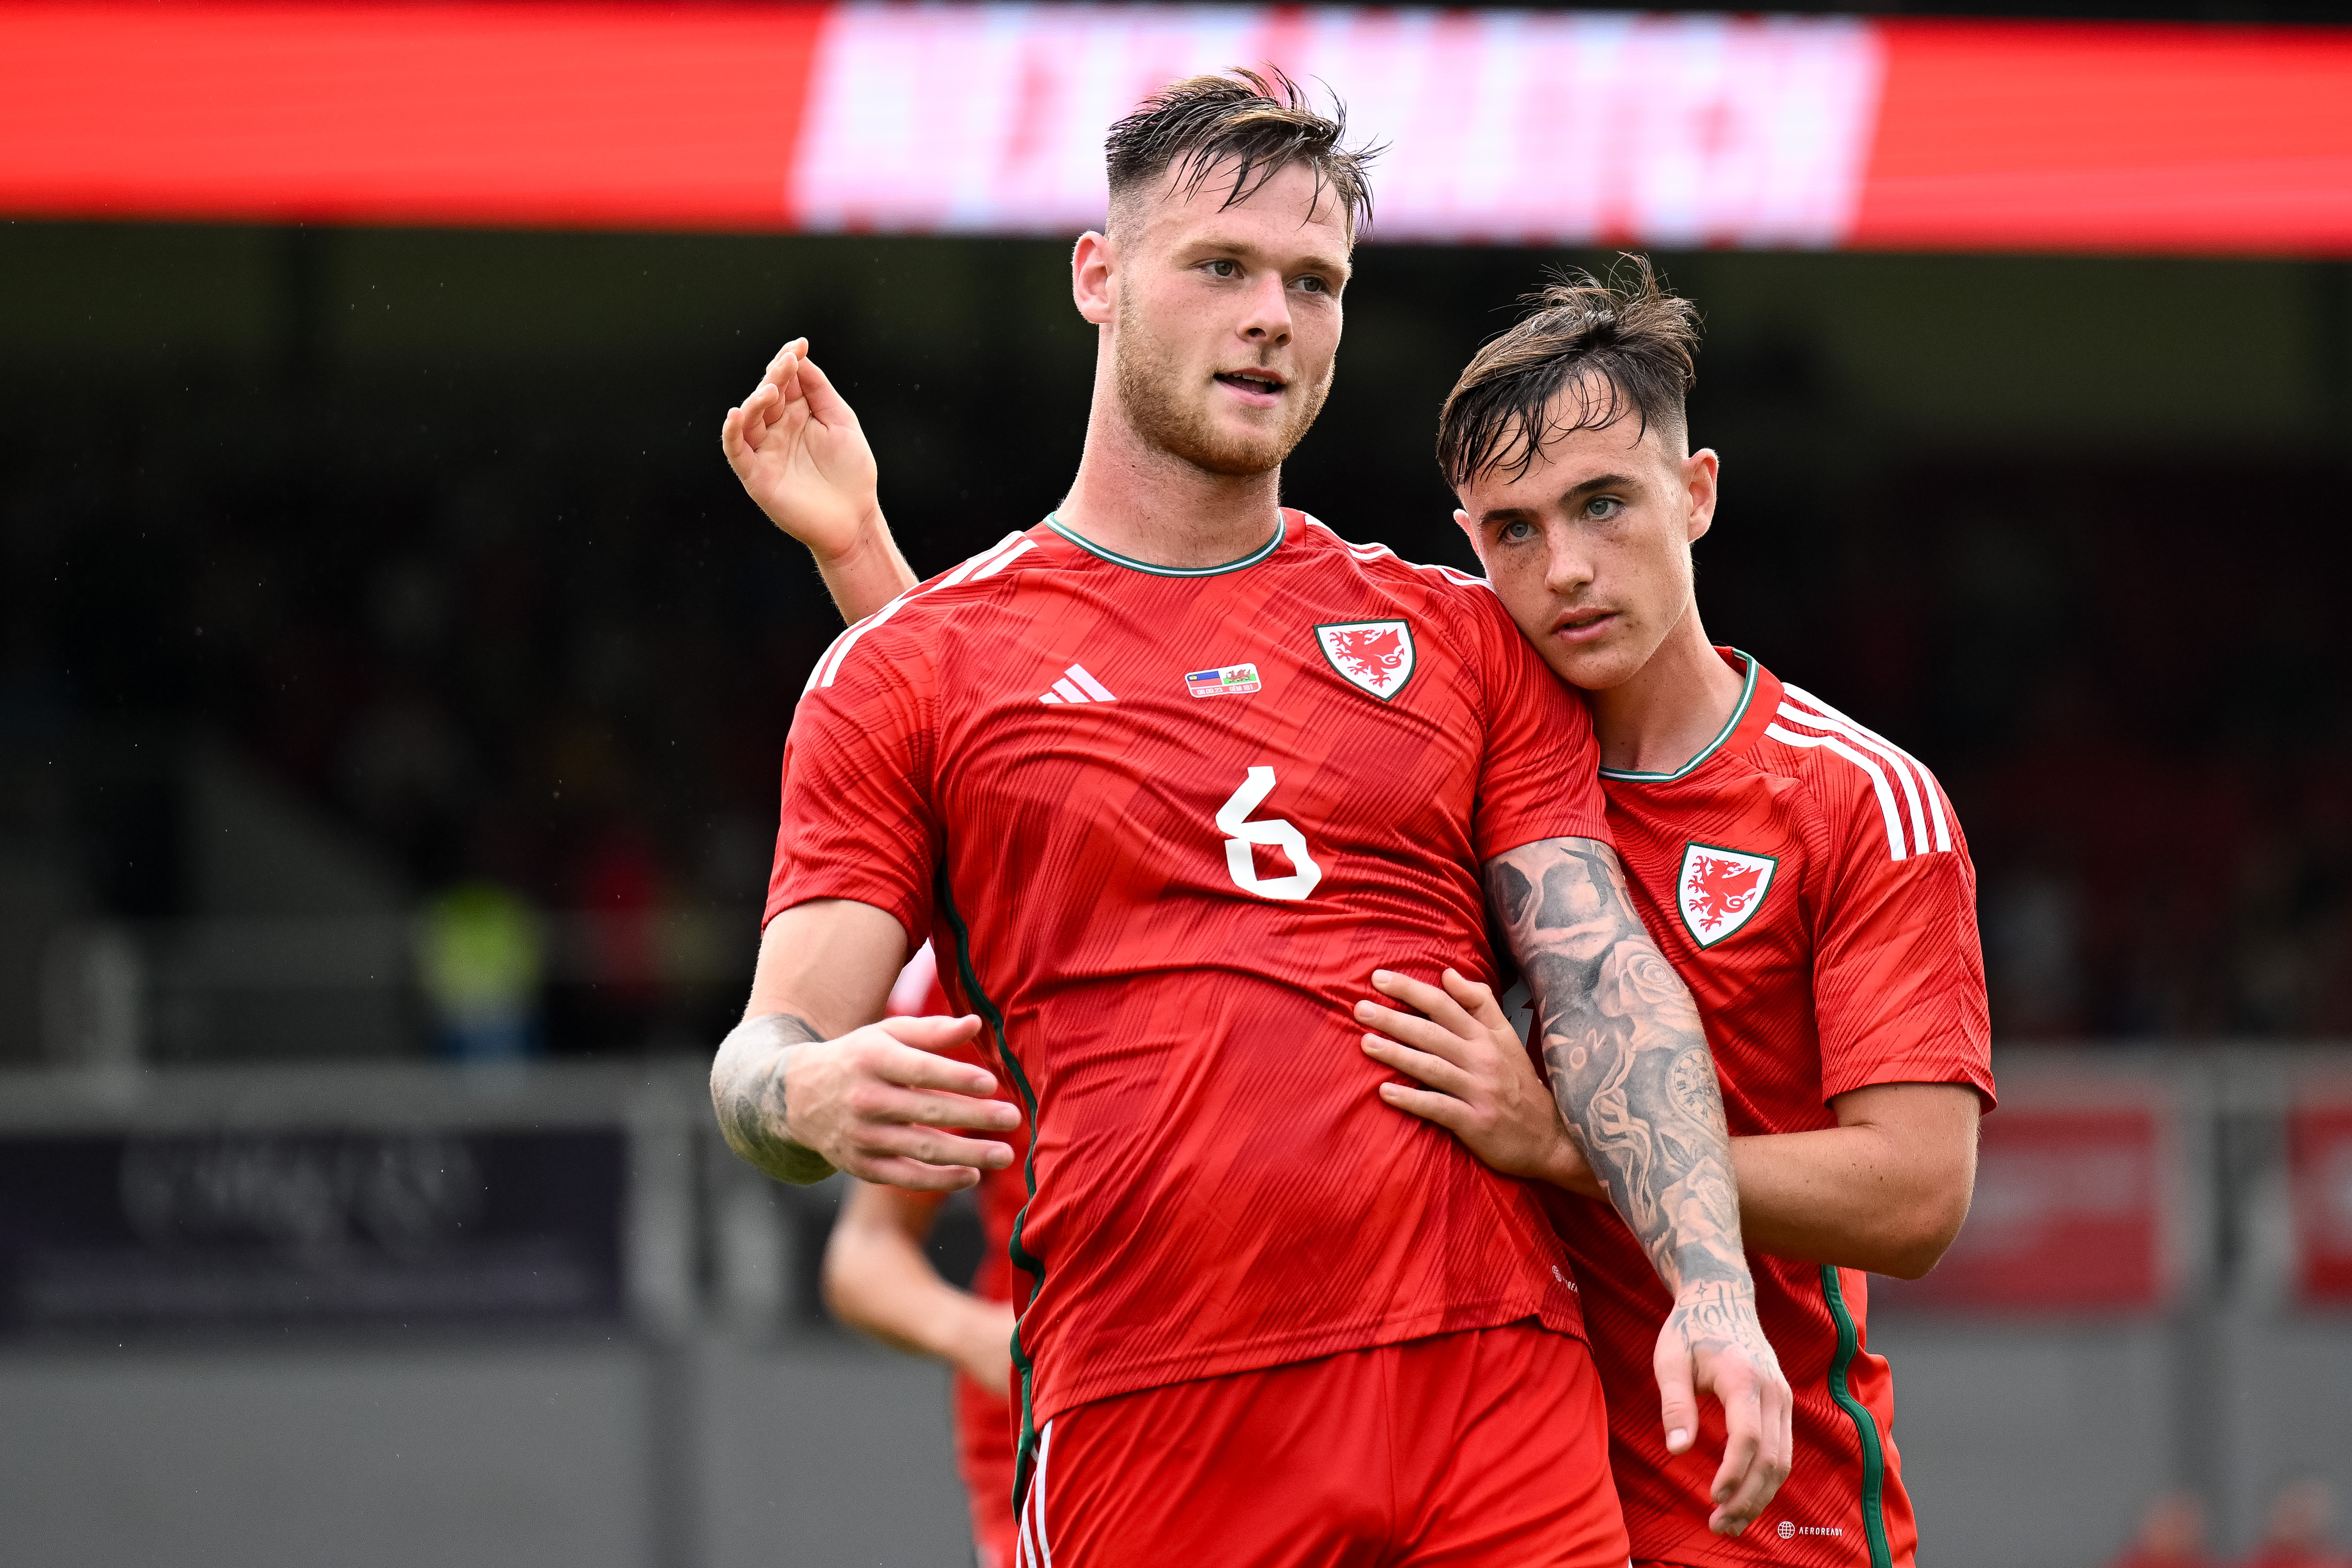 Match Discussion: Swansea City U21 v Cardiff City U21 - Nathaniel